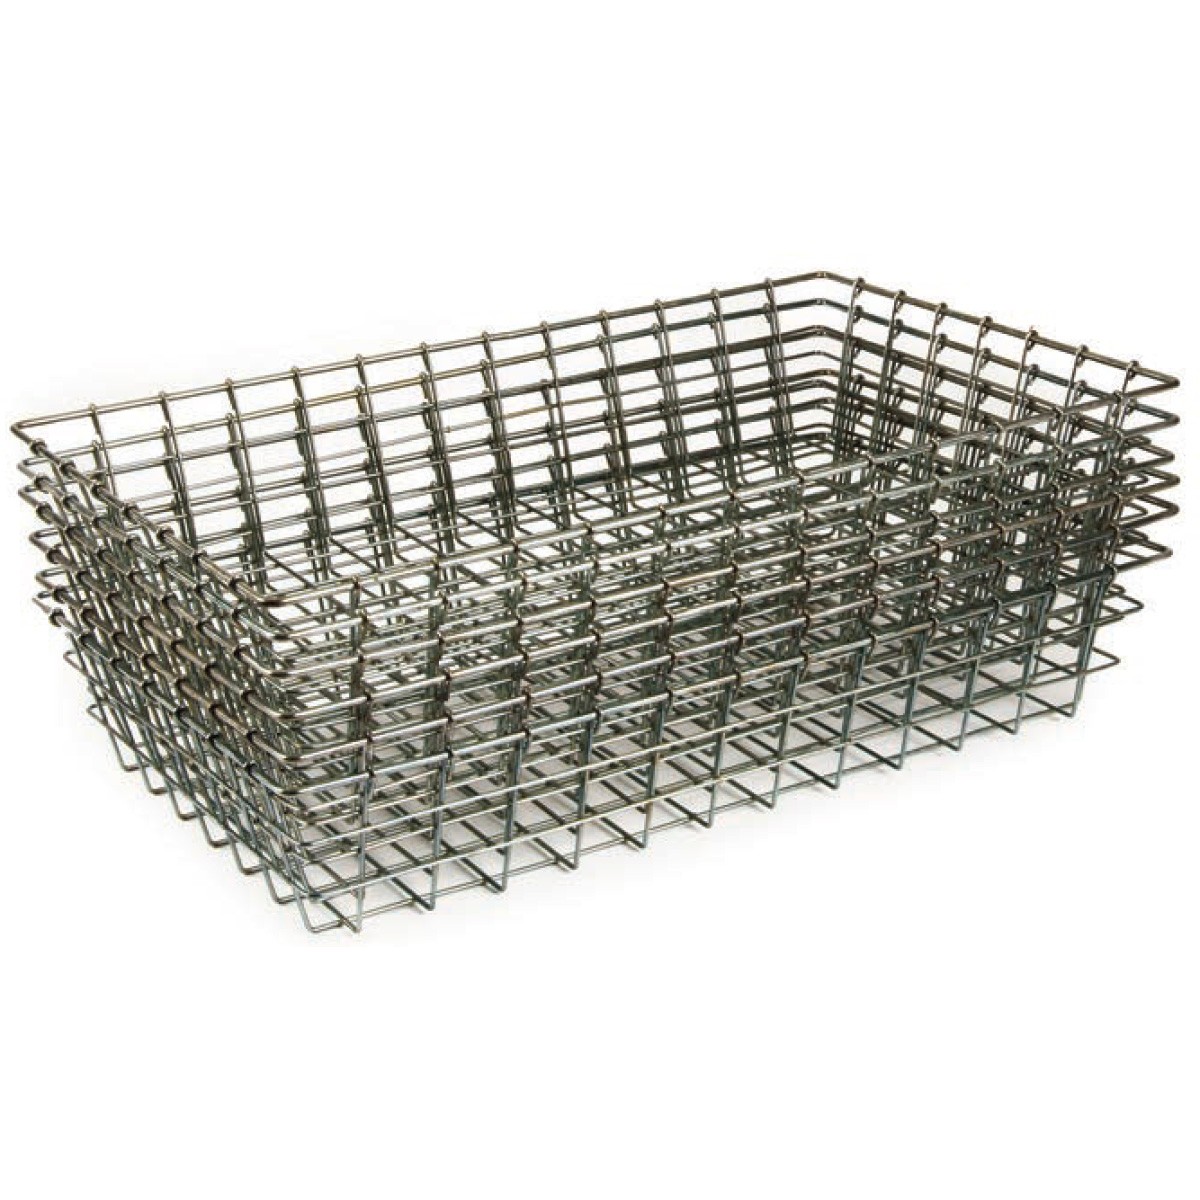 Coated Wire Freezer Basket